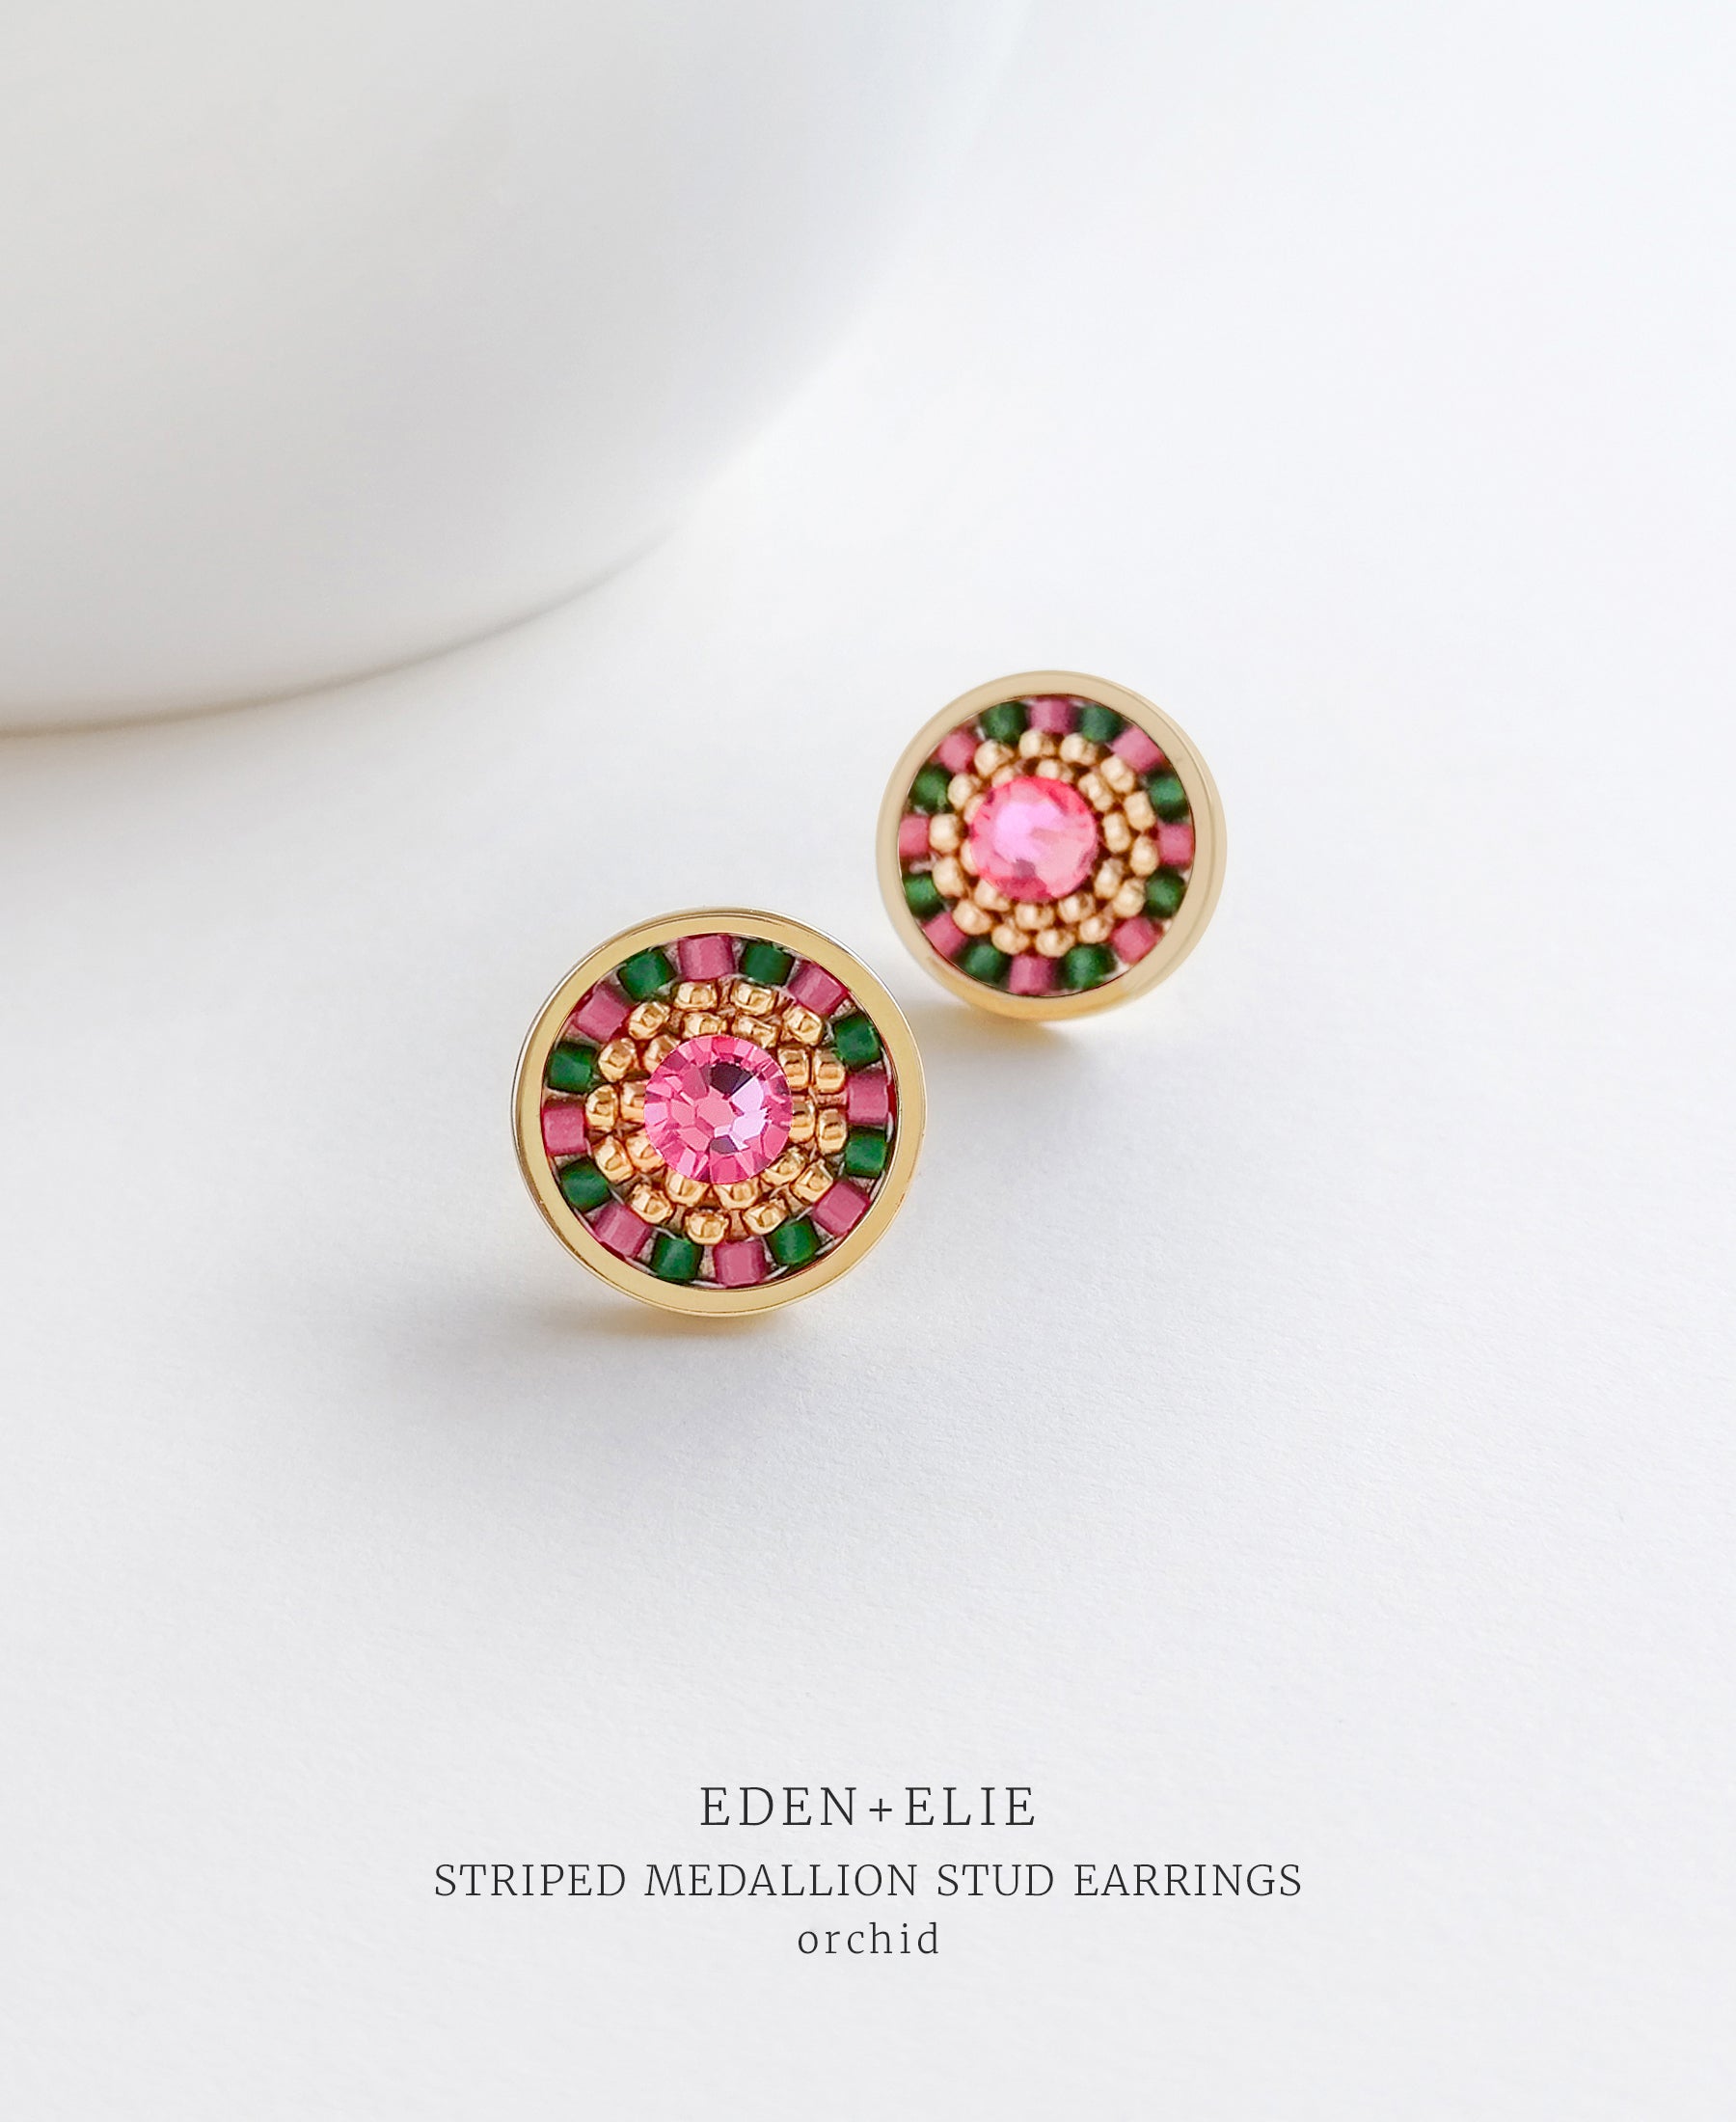 EDEN + ELIE Striped Medallion stud earrings - orchid